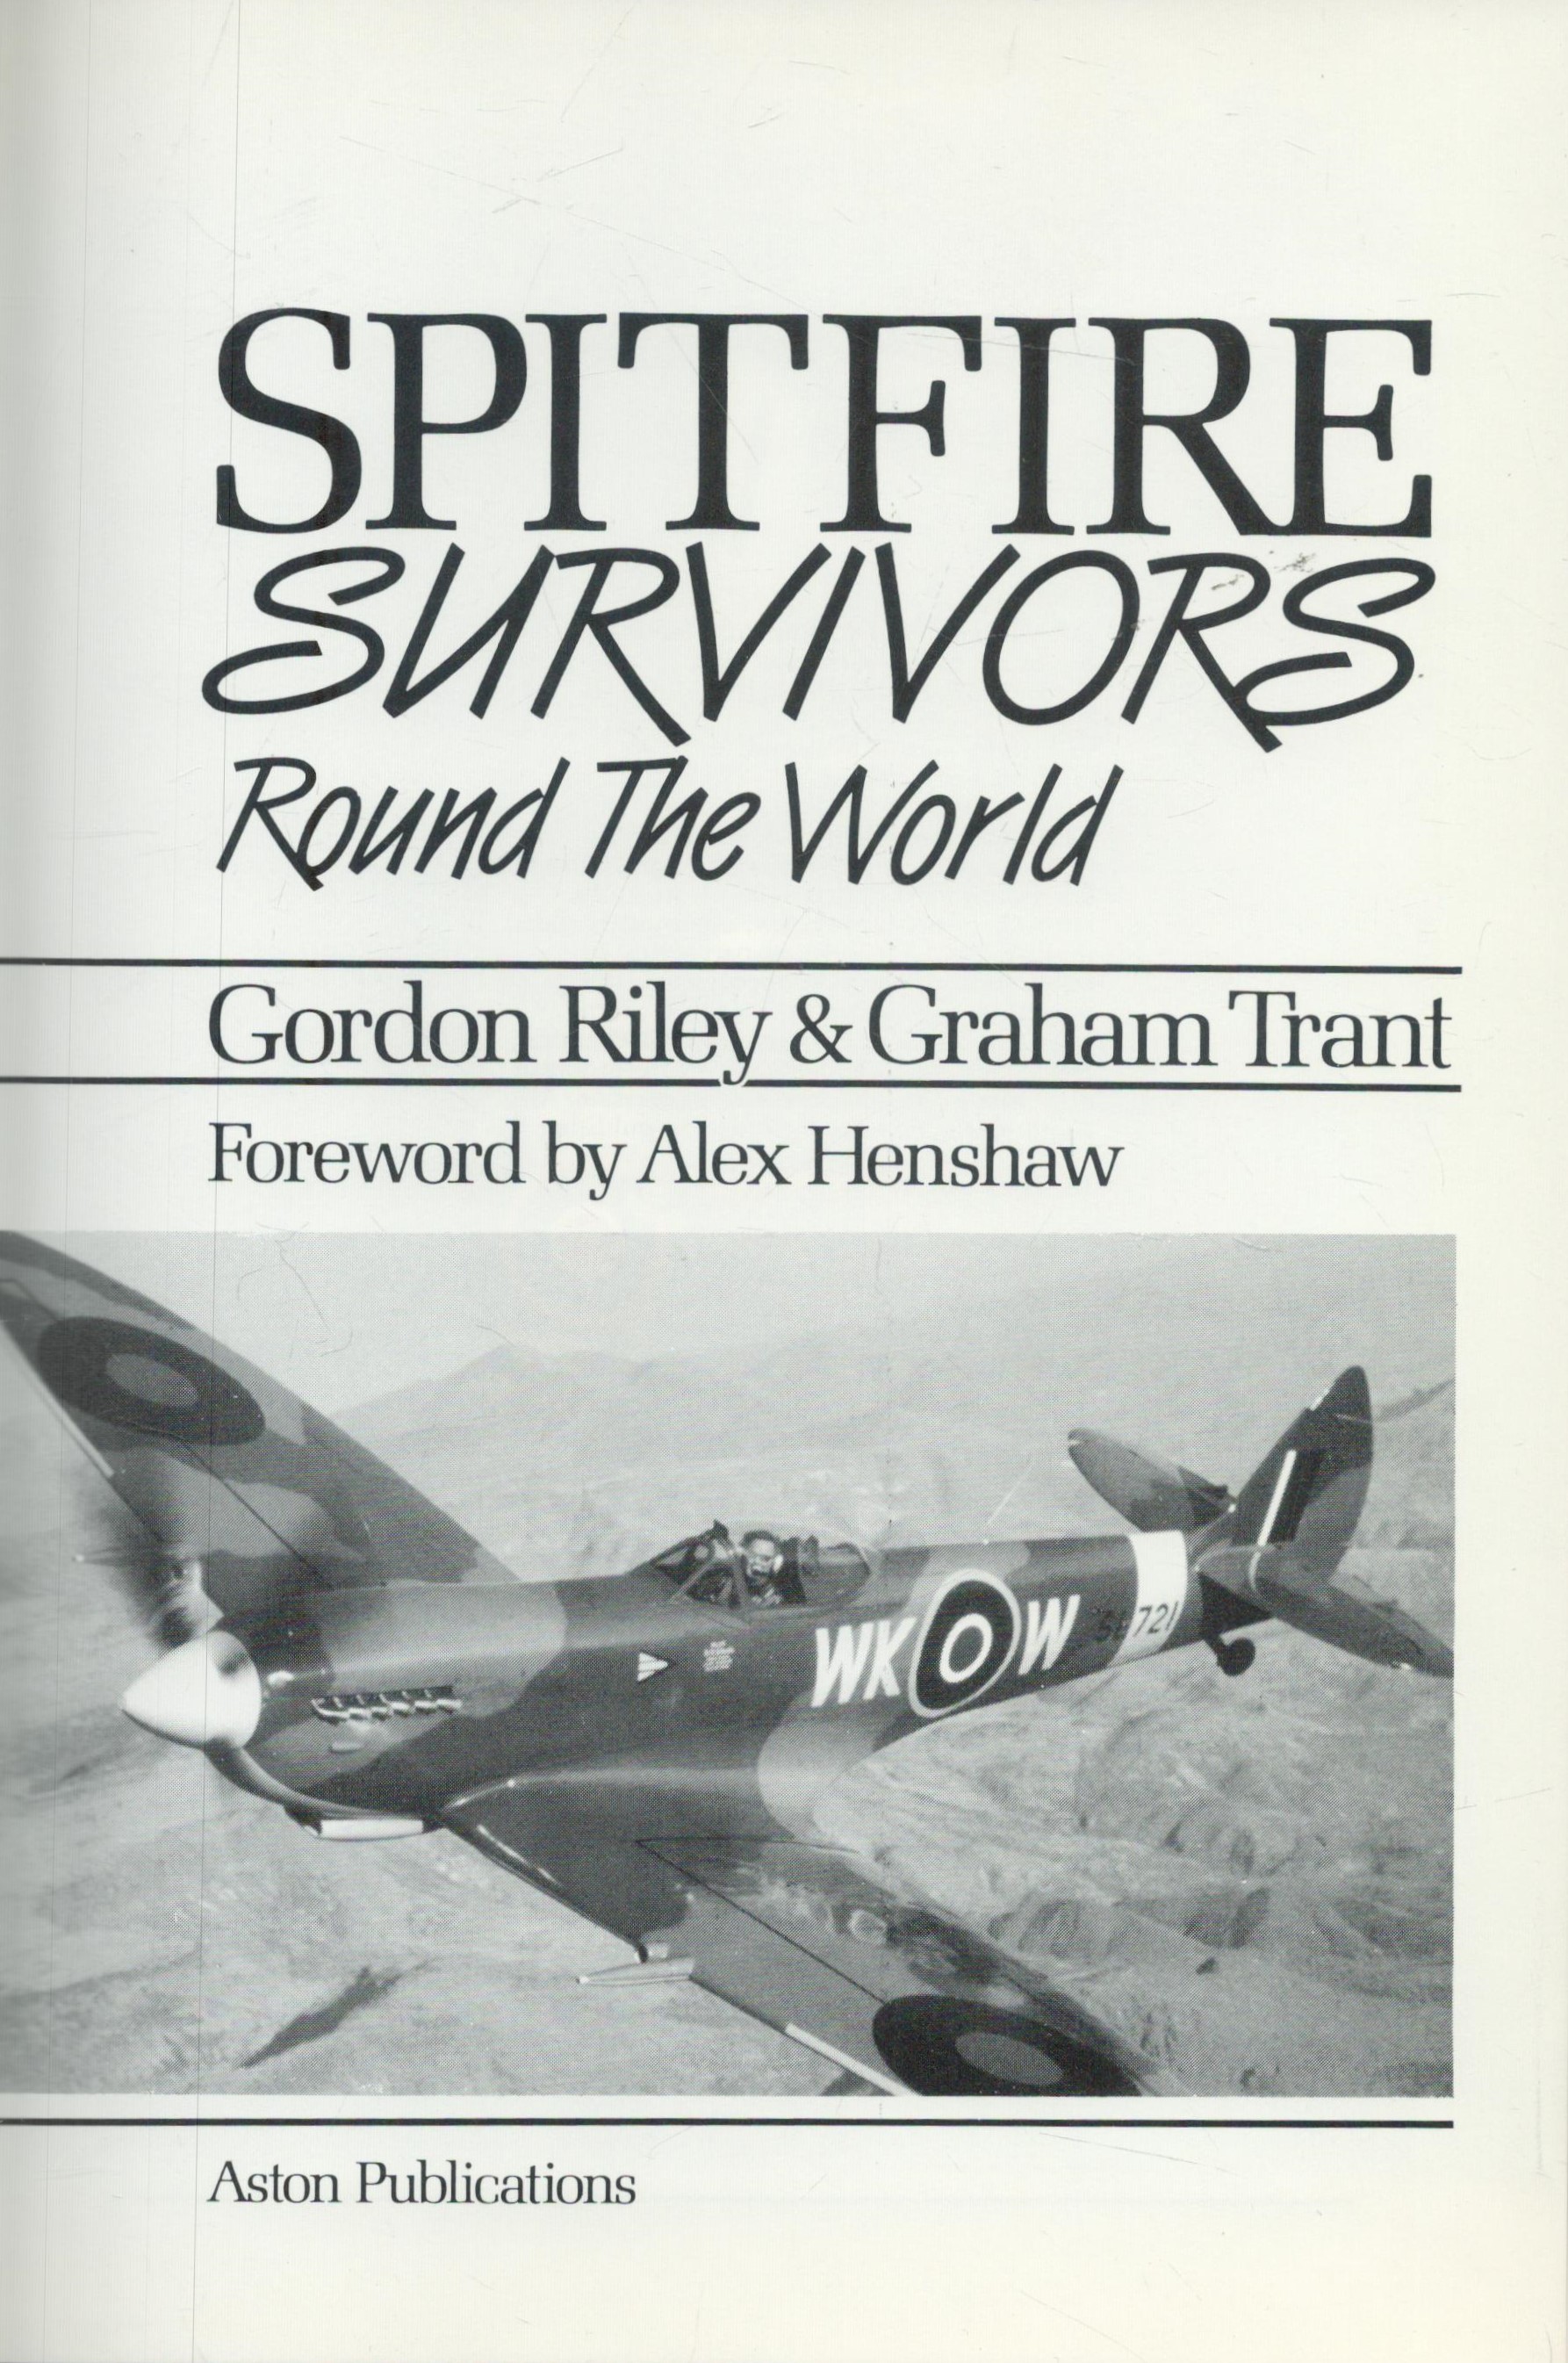 Spitfire Survivors Round The World Hardback Book by Gordon Riley & Graham Trant 1986 First Edition - Image 2 of 3